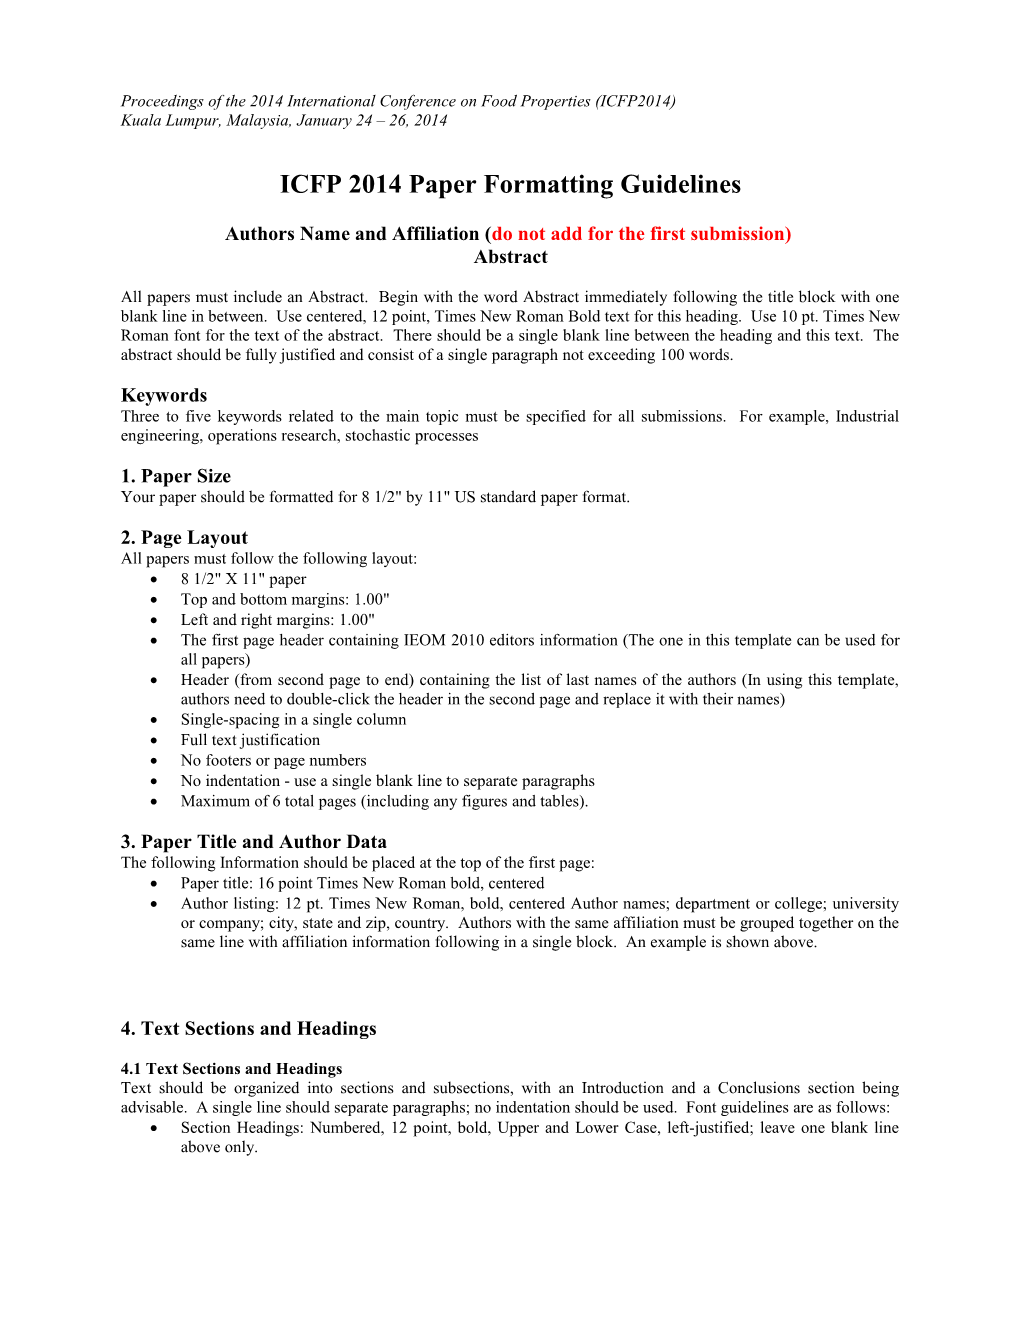 ICFP2014 Paper Formatting Guidelines